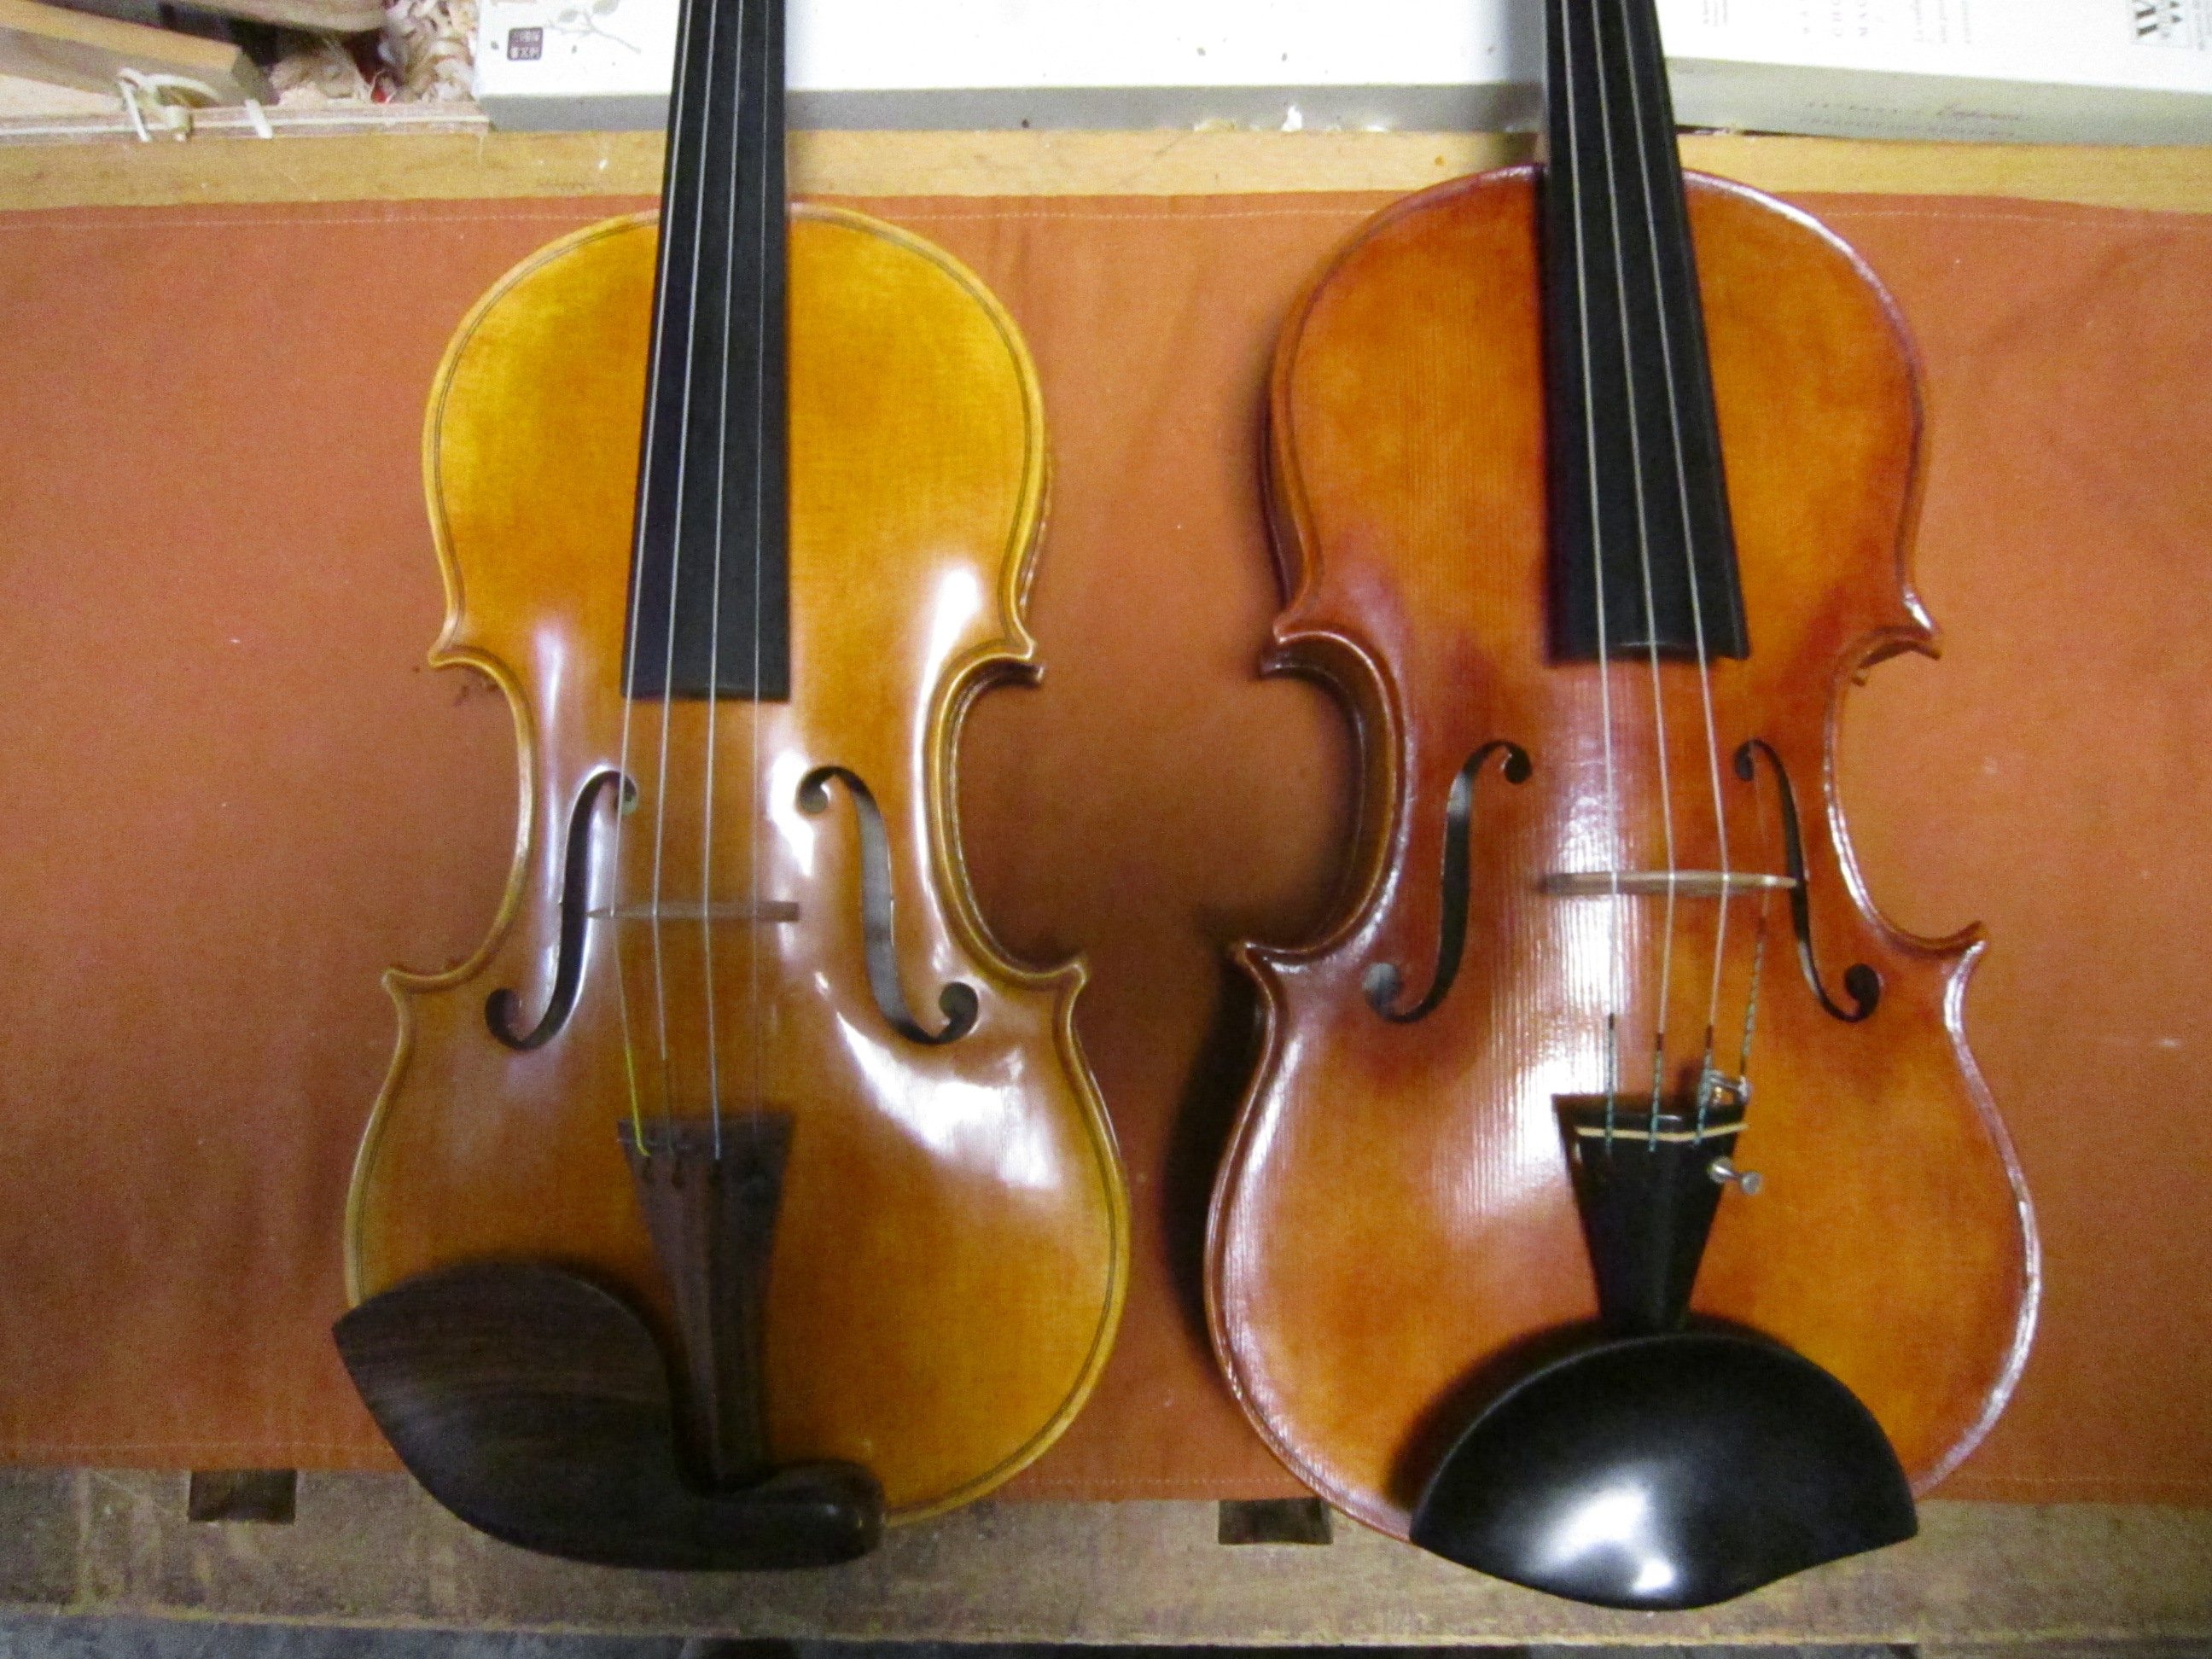 A Bellosioモデルの超小型ビオラ バイオリン工房ドマーニ